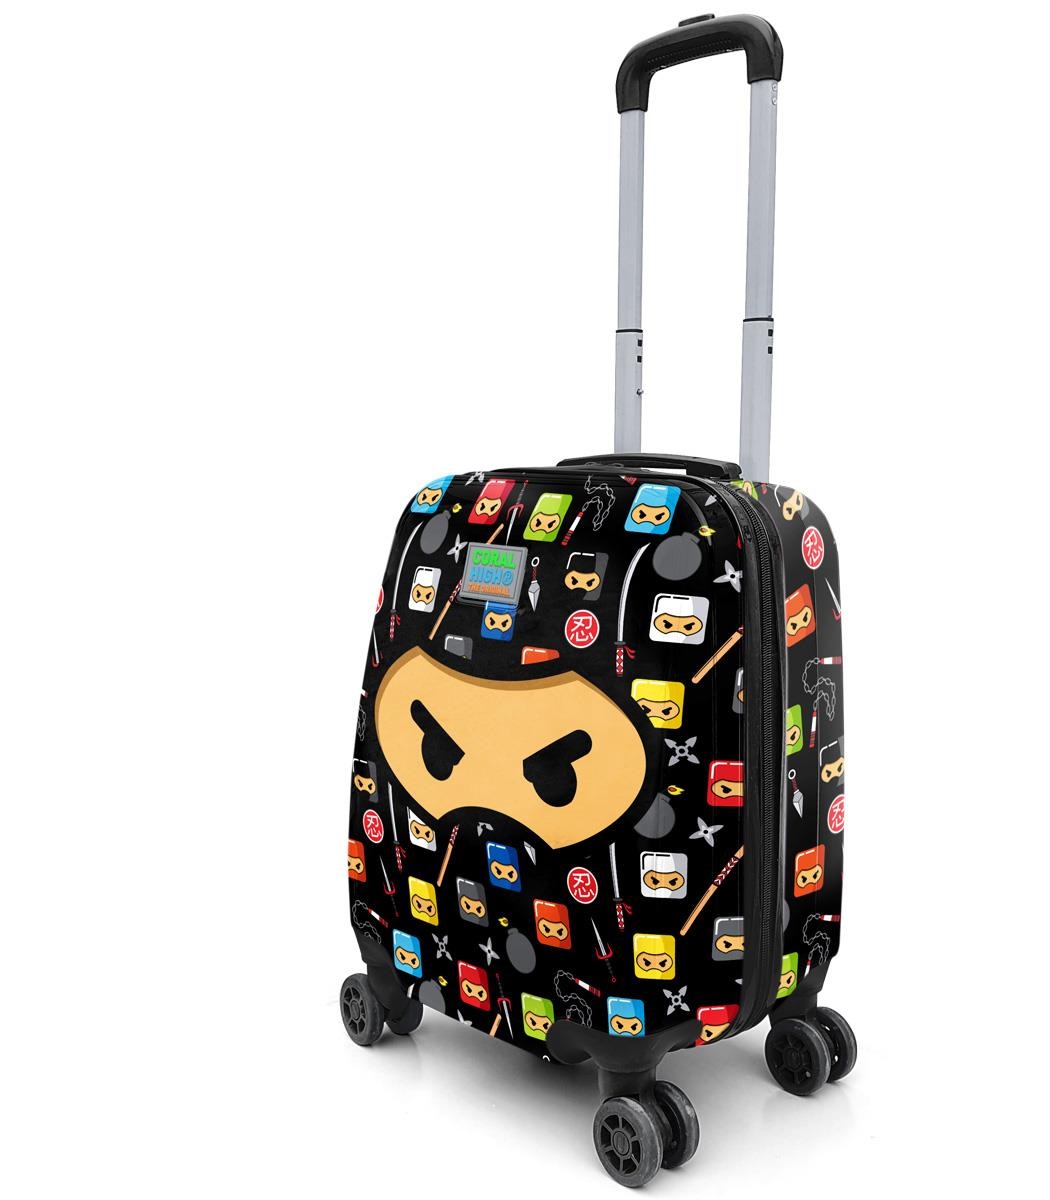 Coral High Kids Luggage suitcase - Black Ninja Patterned